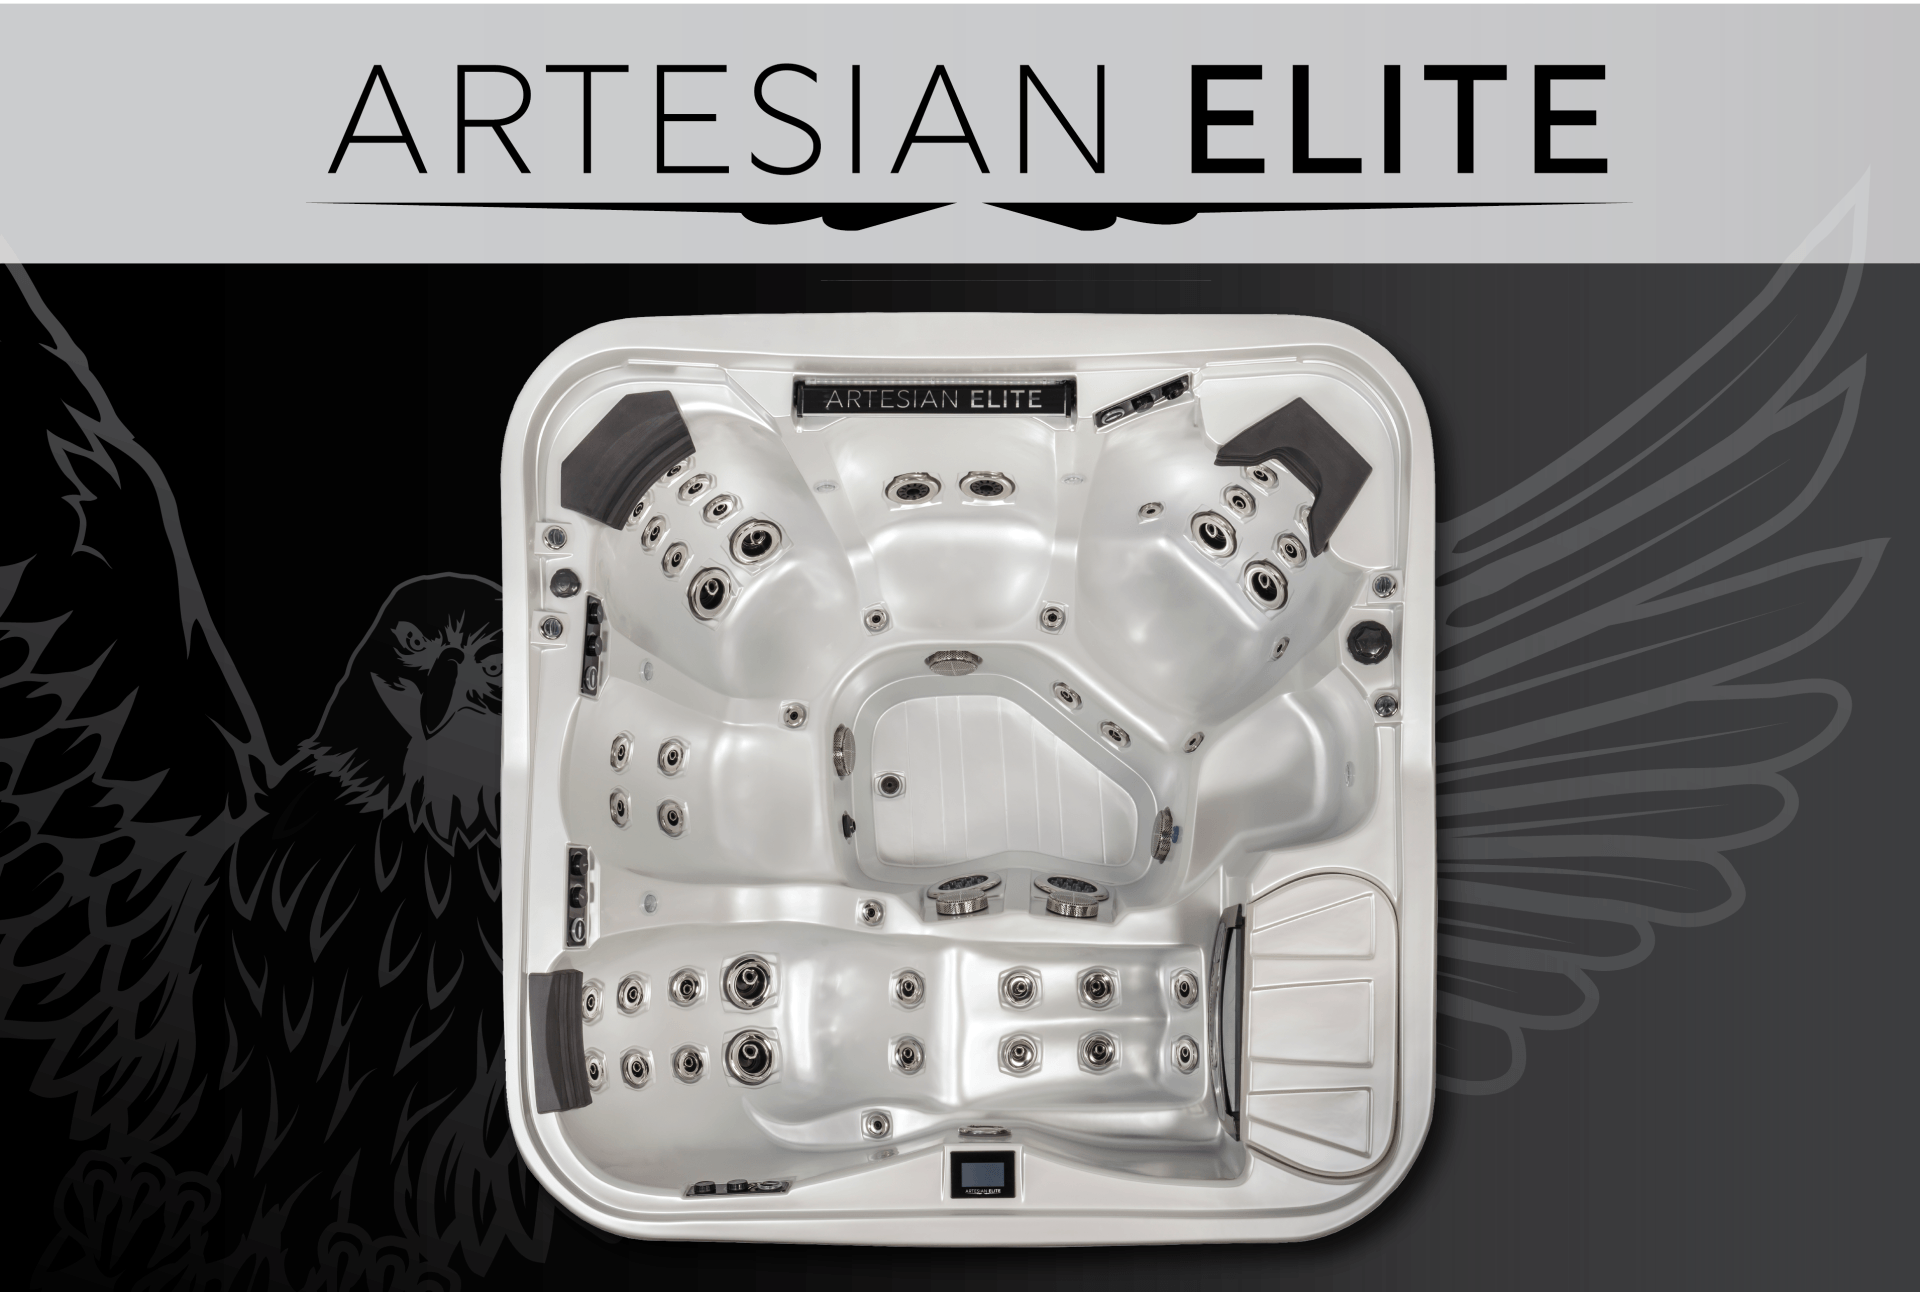 Artesian Spas Artesian Elite hot tub range at Hot Tub Haven